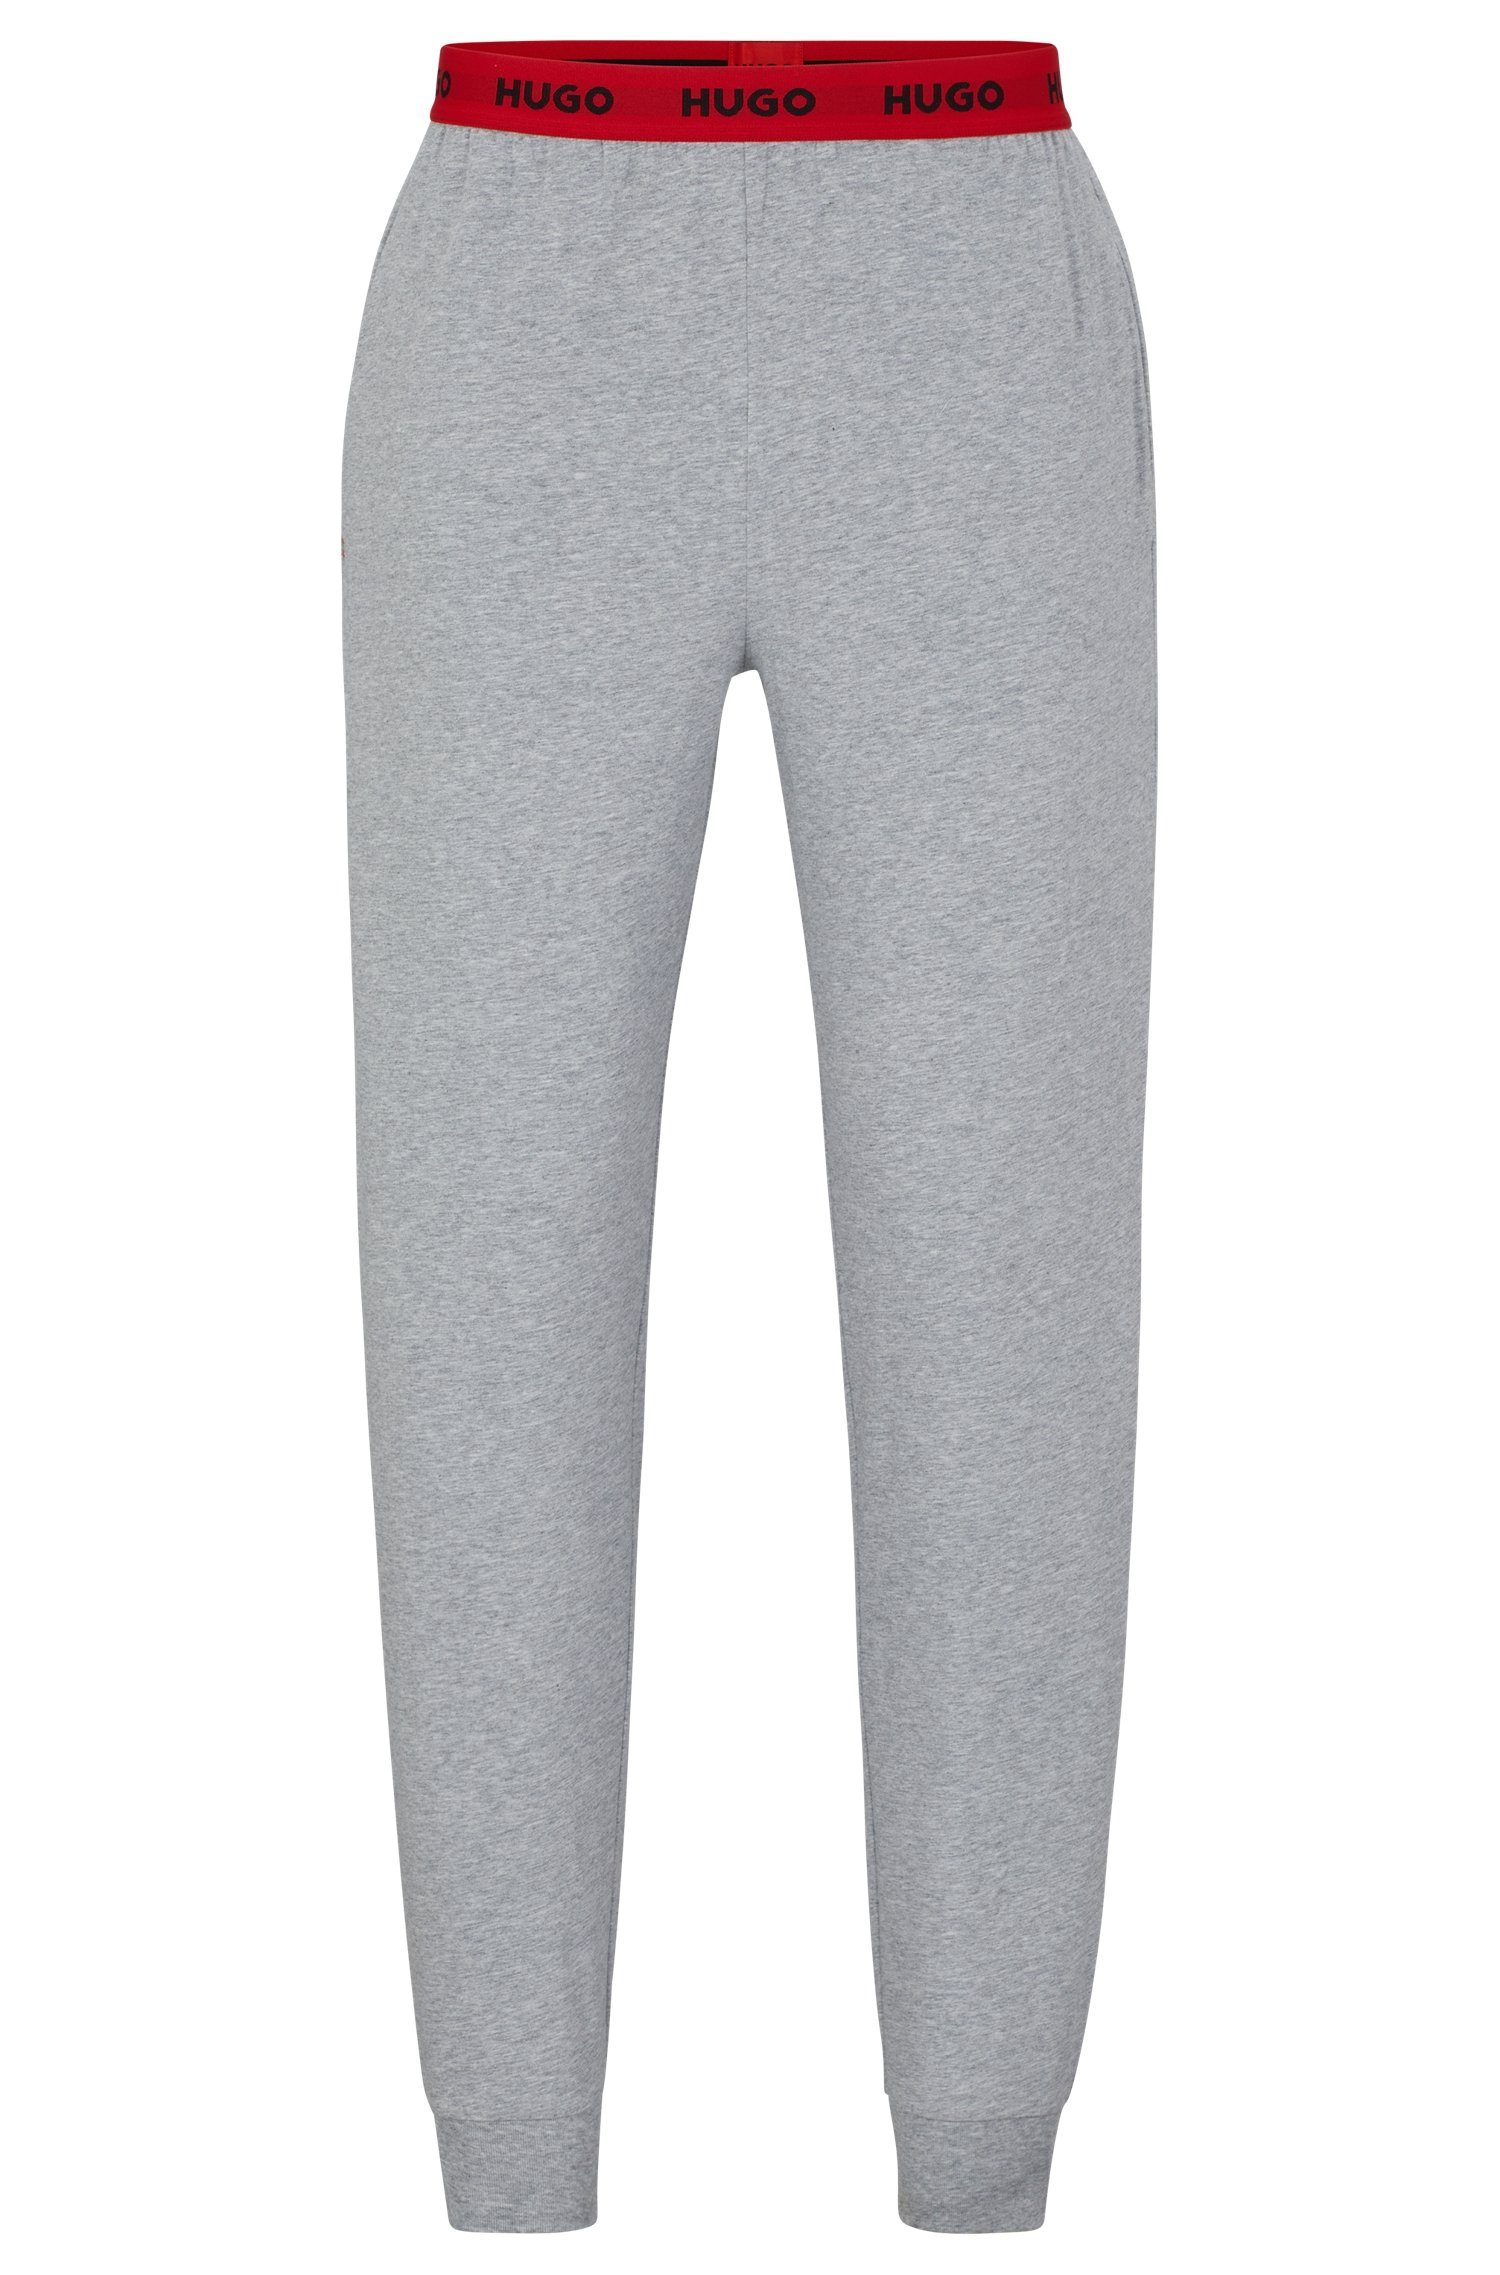 Linked kontrastfarbenen HUGO Pyjamahose Pants mit Logo-Elastikbund Medium-Grey035